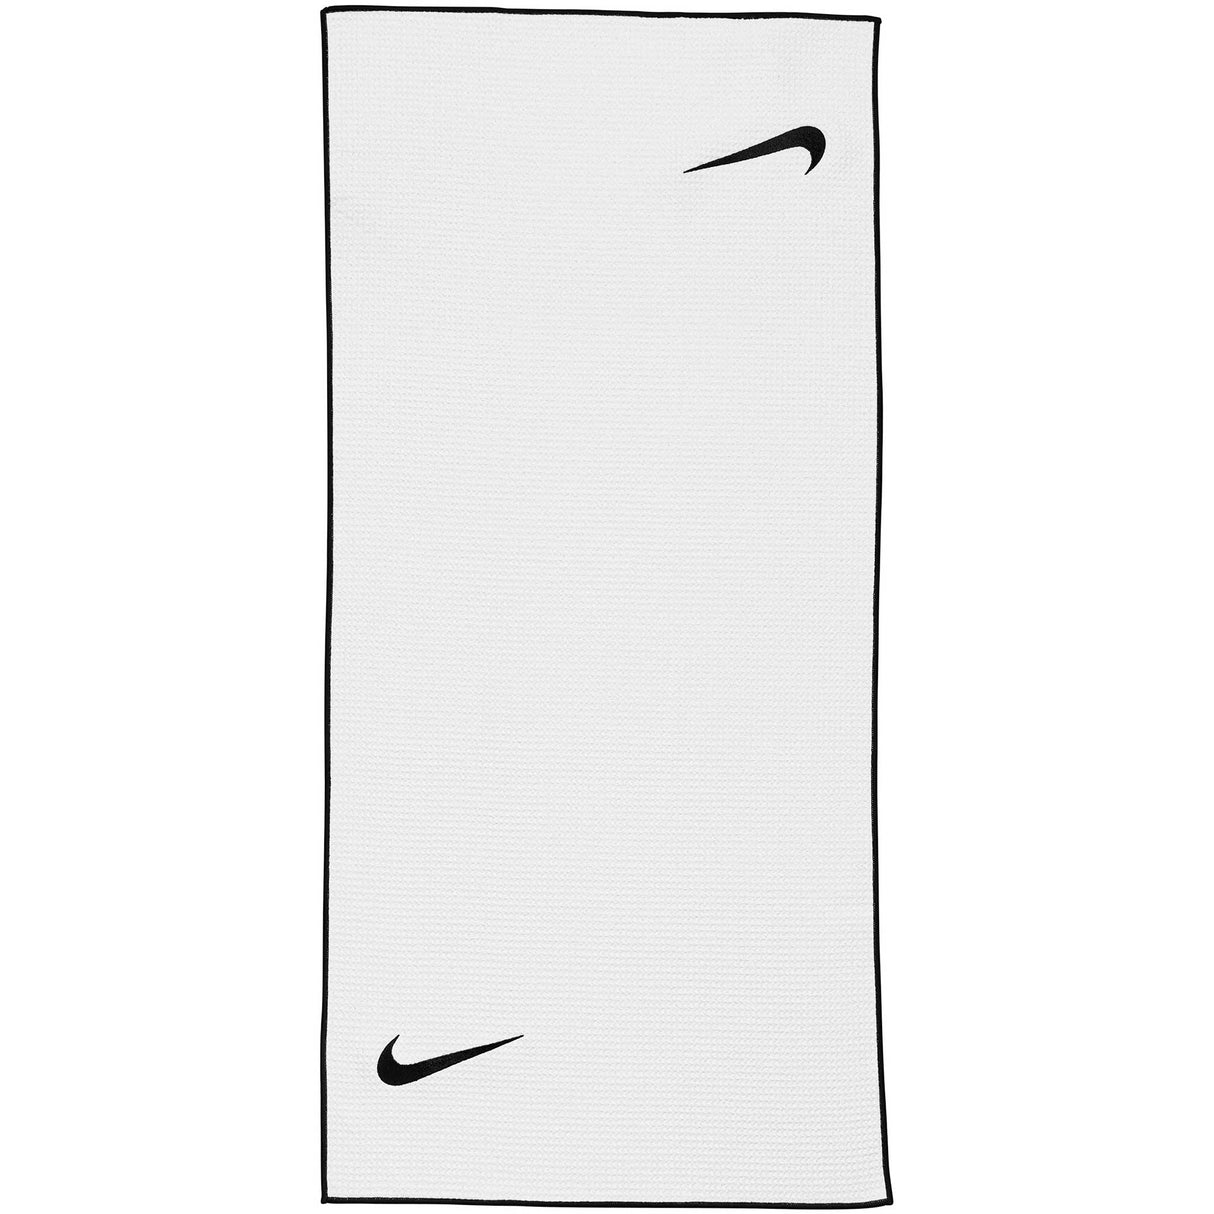 Nike Caddy Golf Towel serviette de sport - White / Black